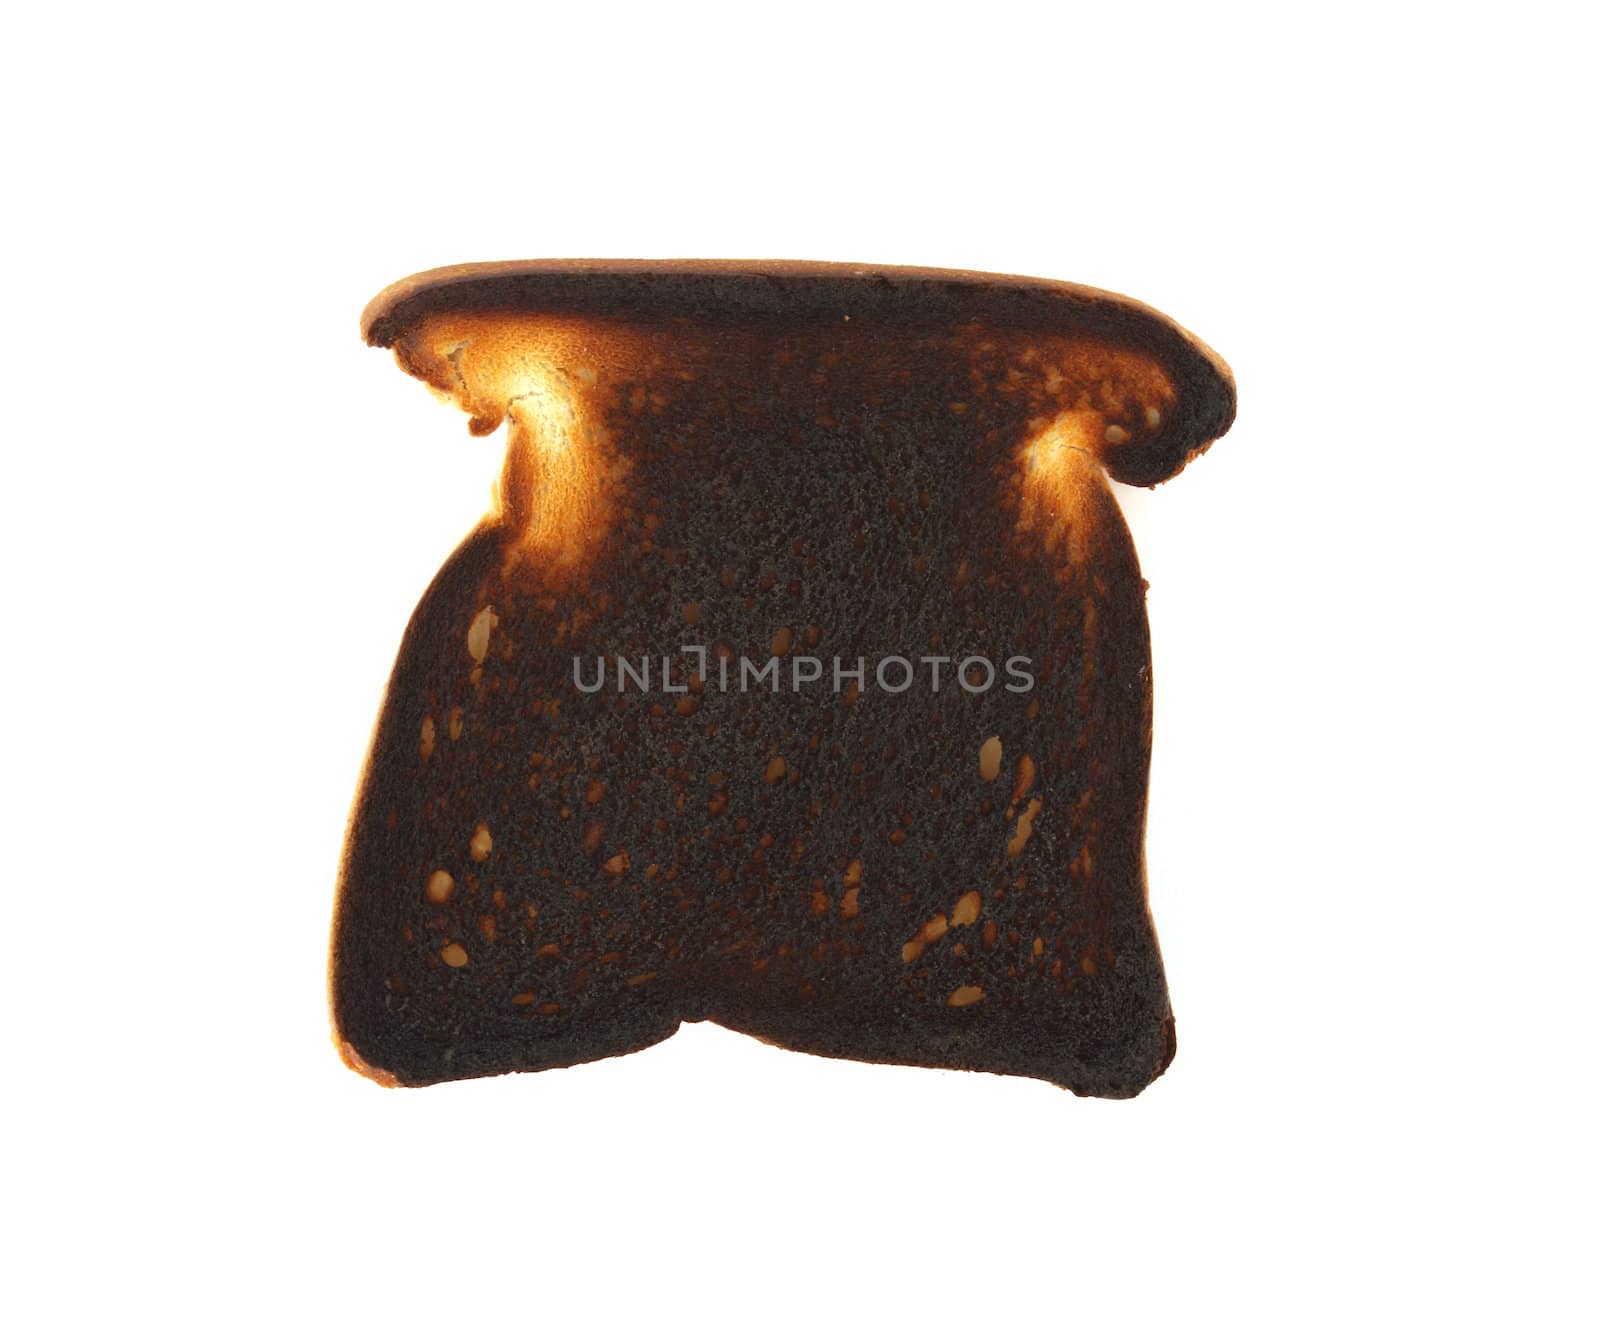 Burnt Toast by jabiru